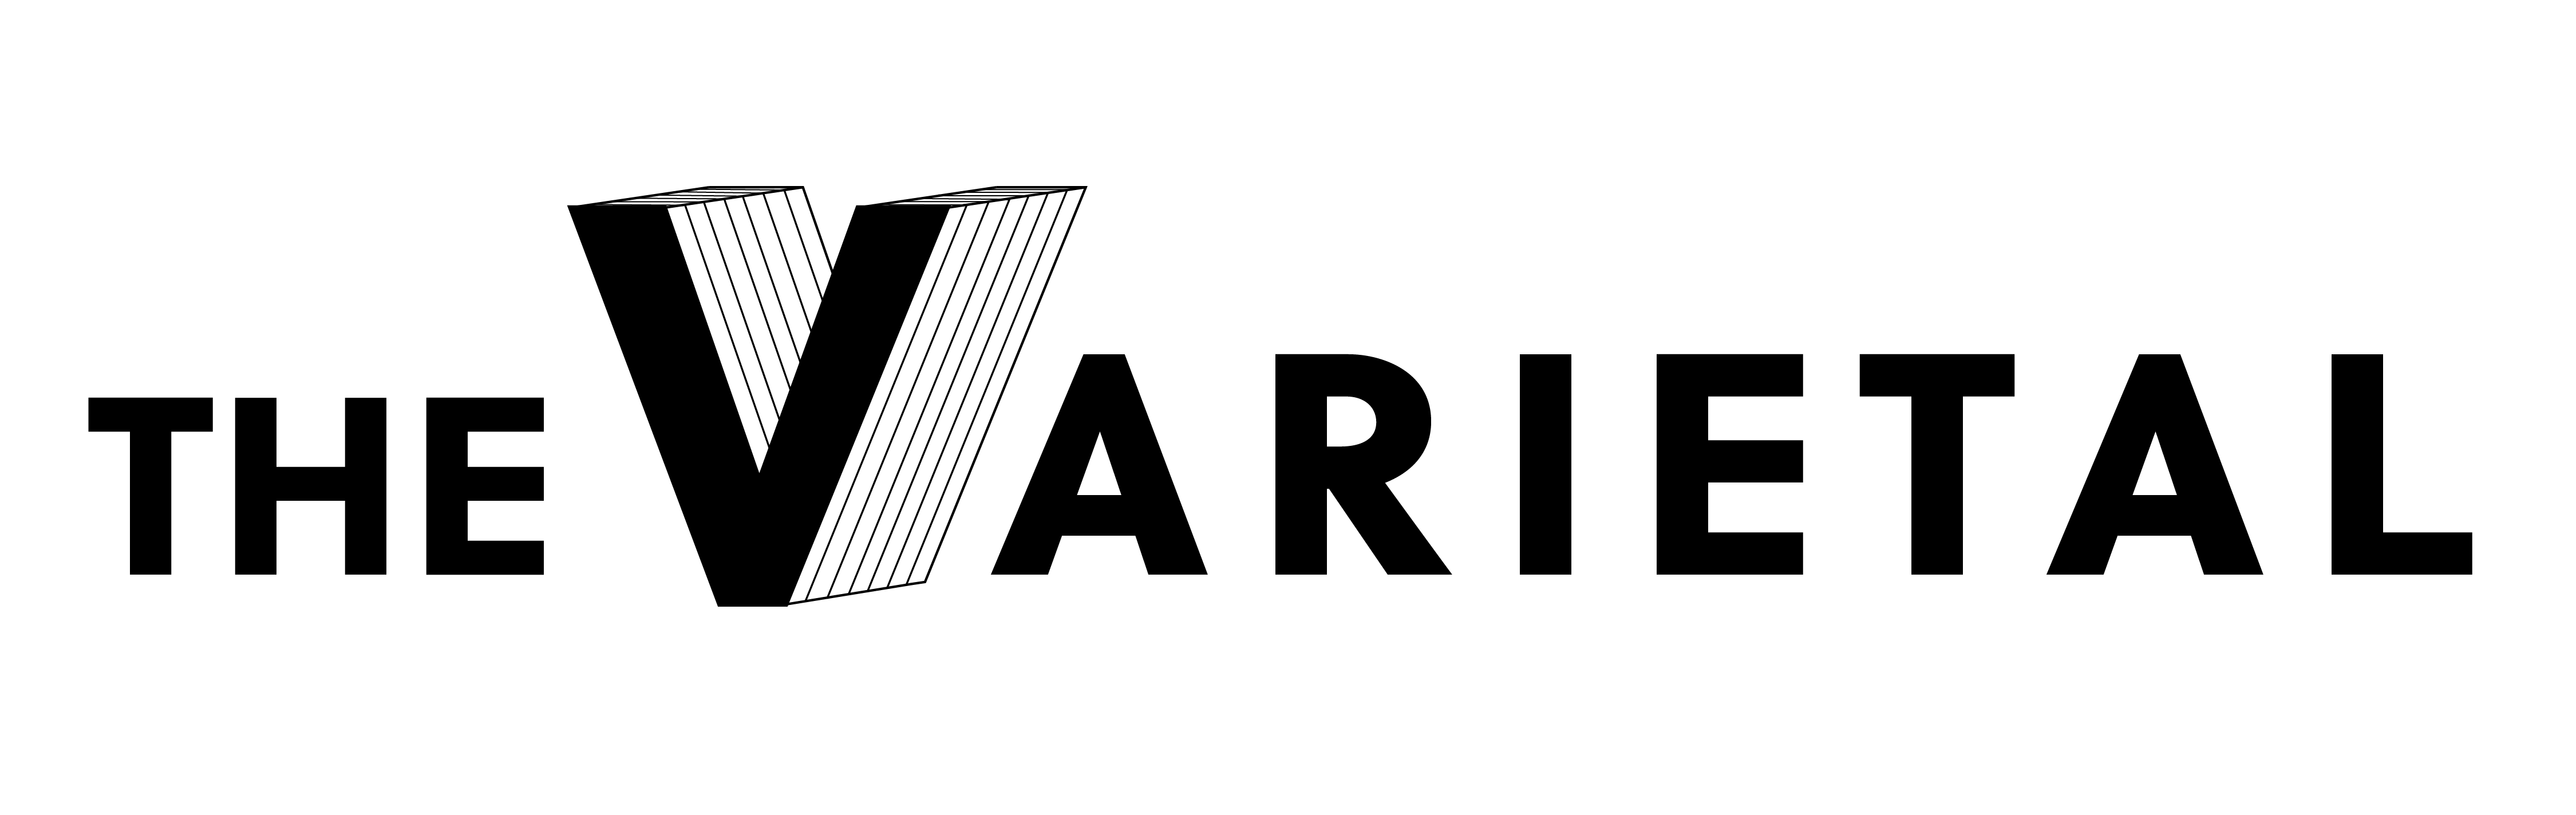 The Varietal literature logo